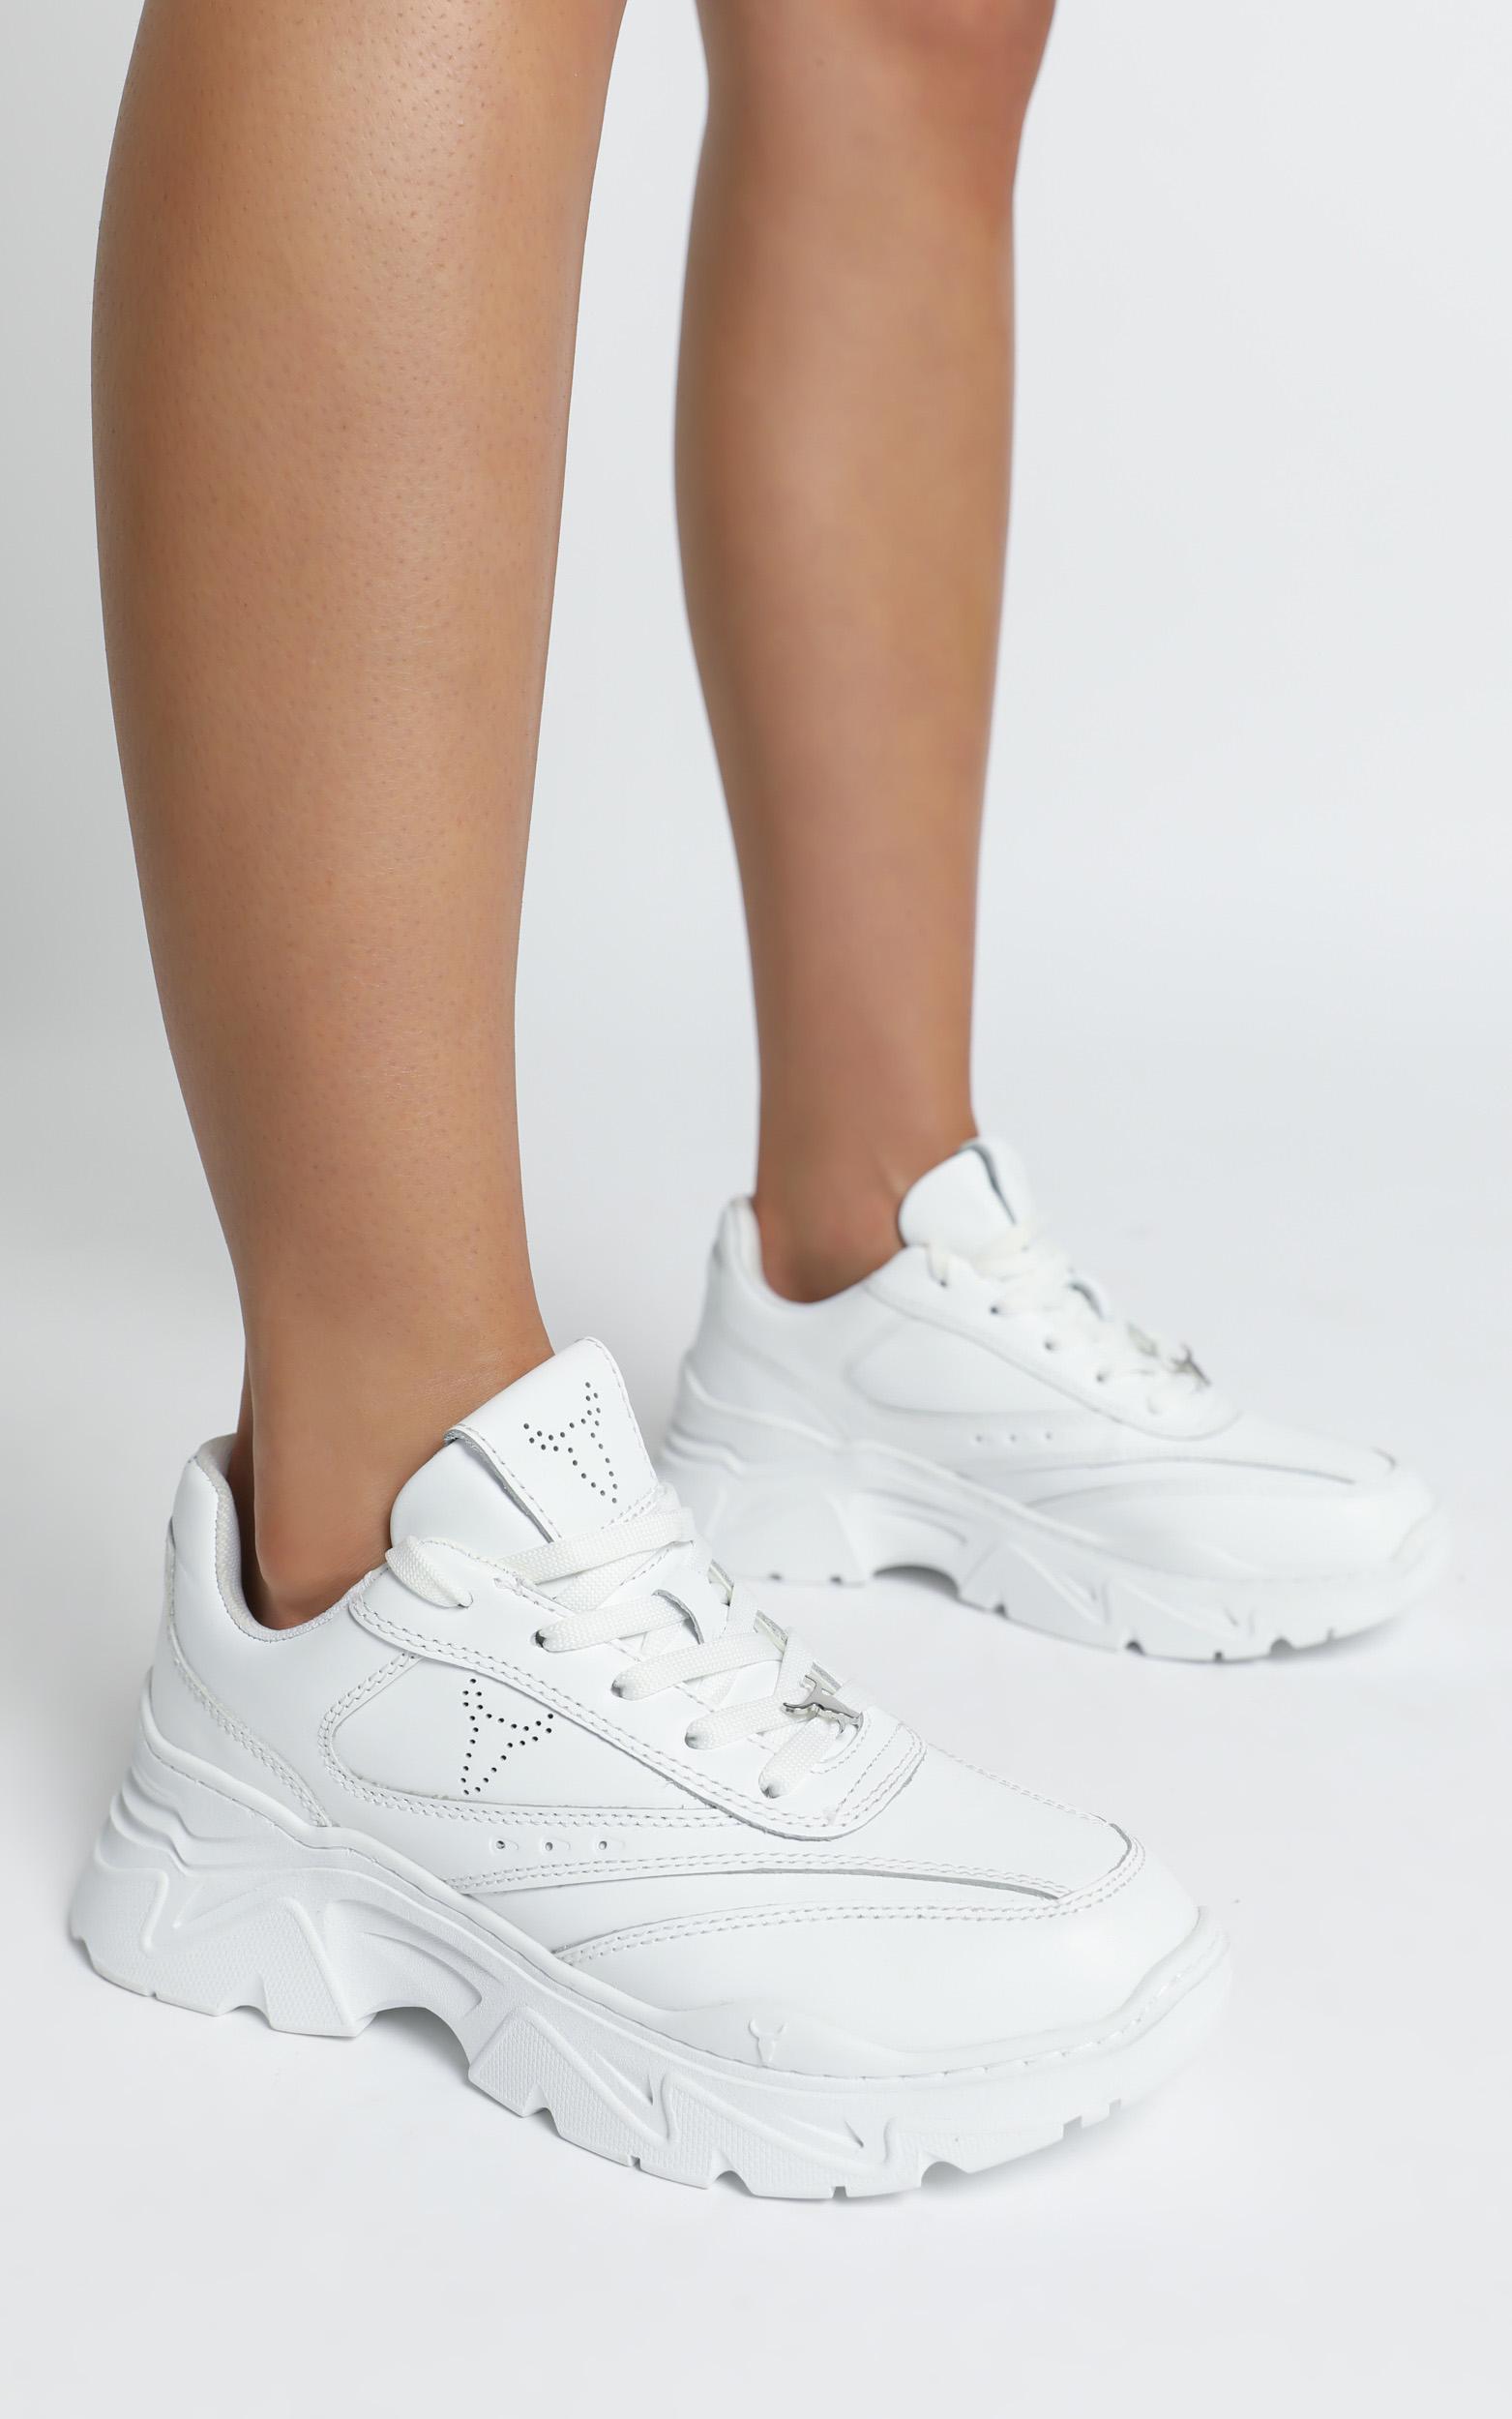 Windsor Smith - Craze Sneakers in White Leather | Showpo